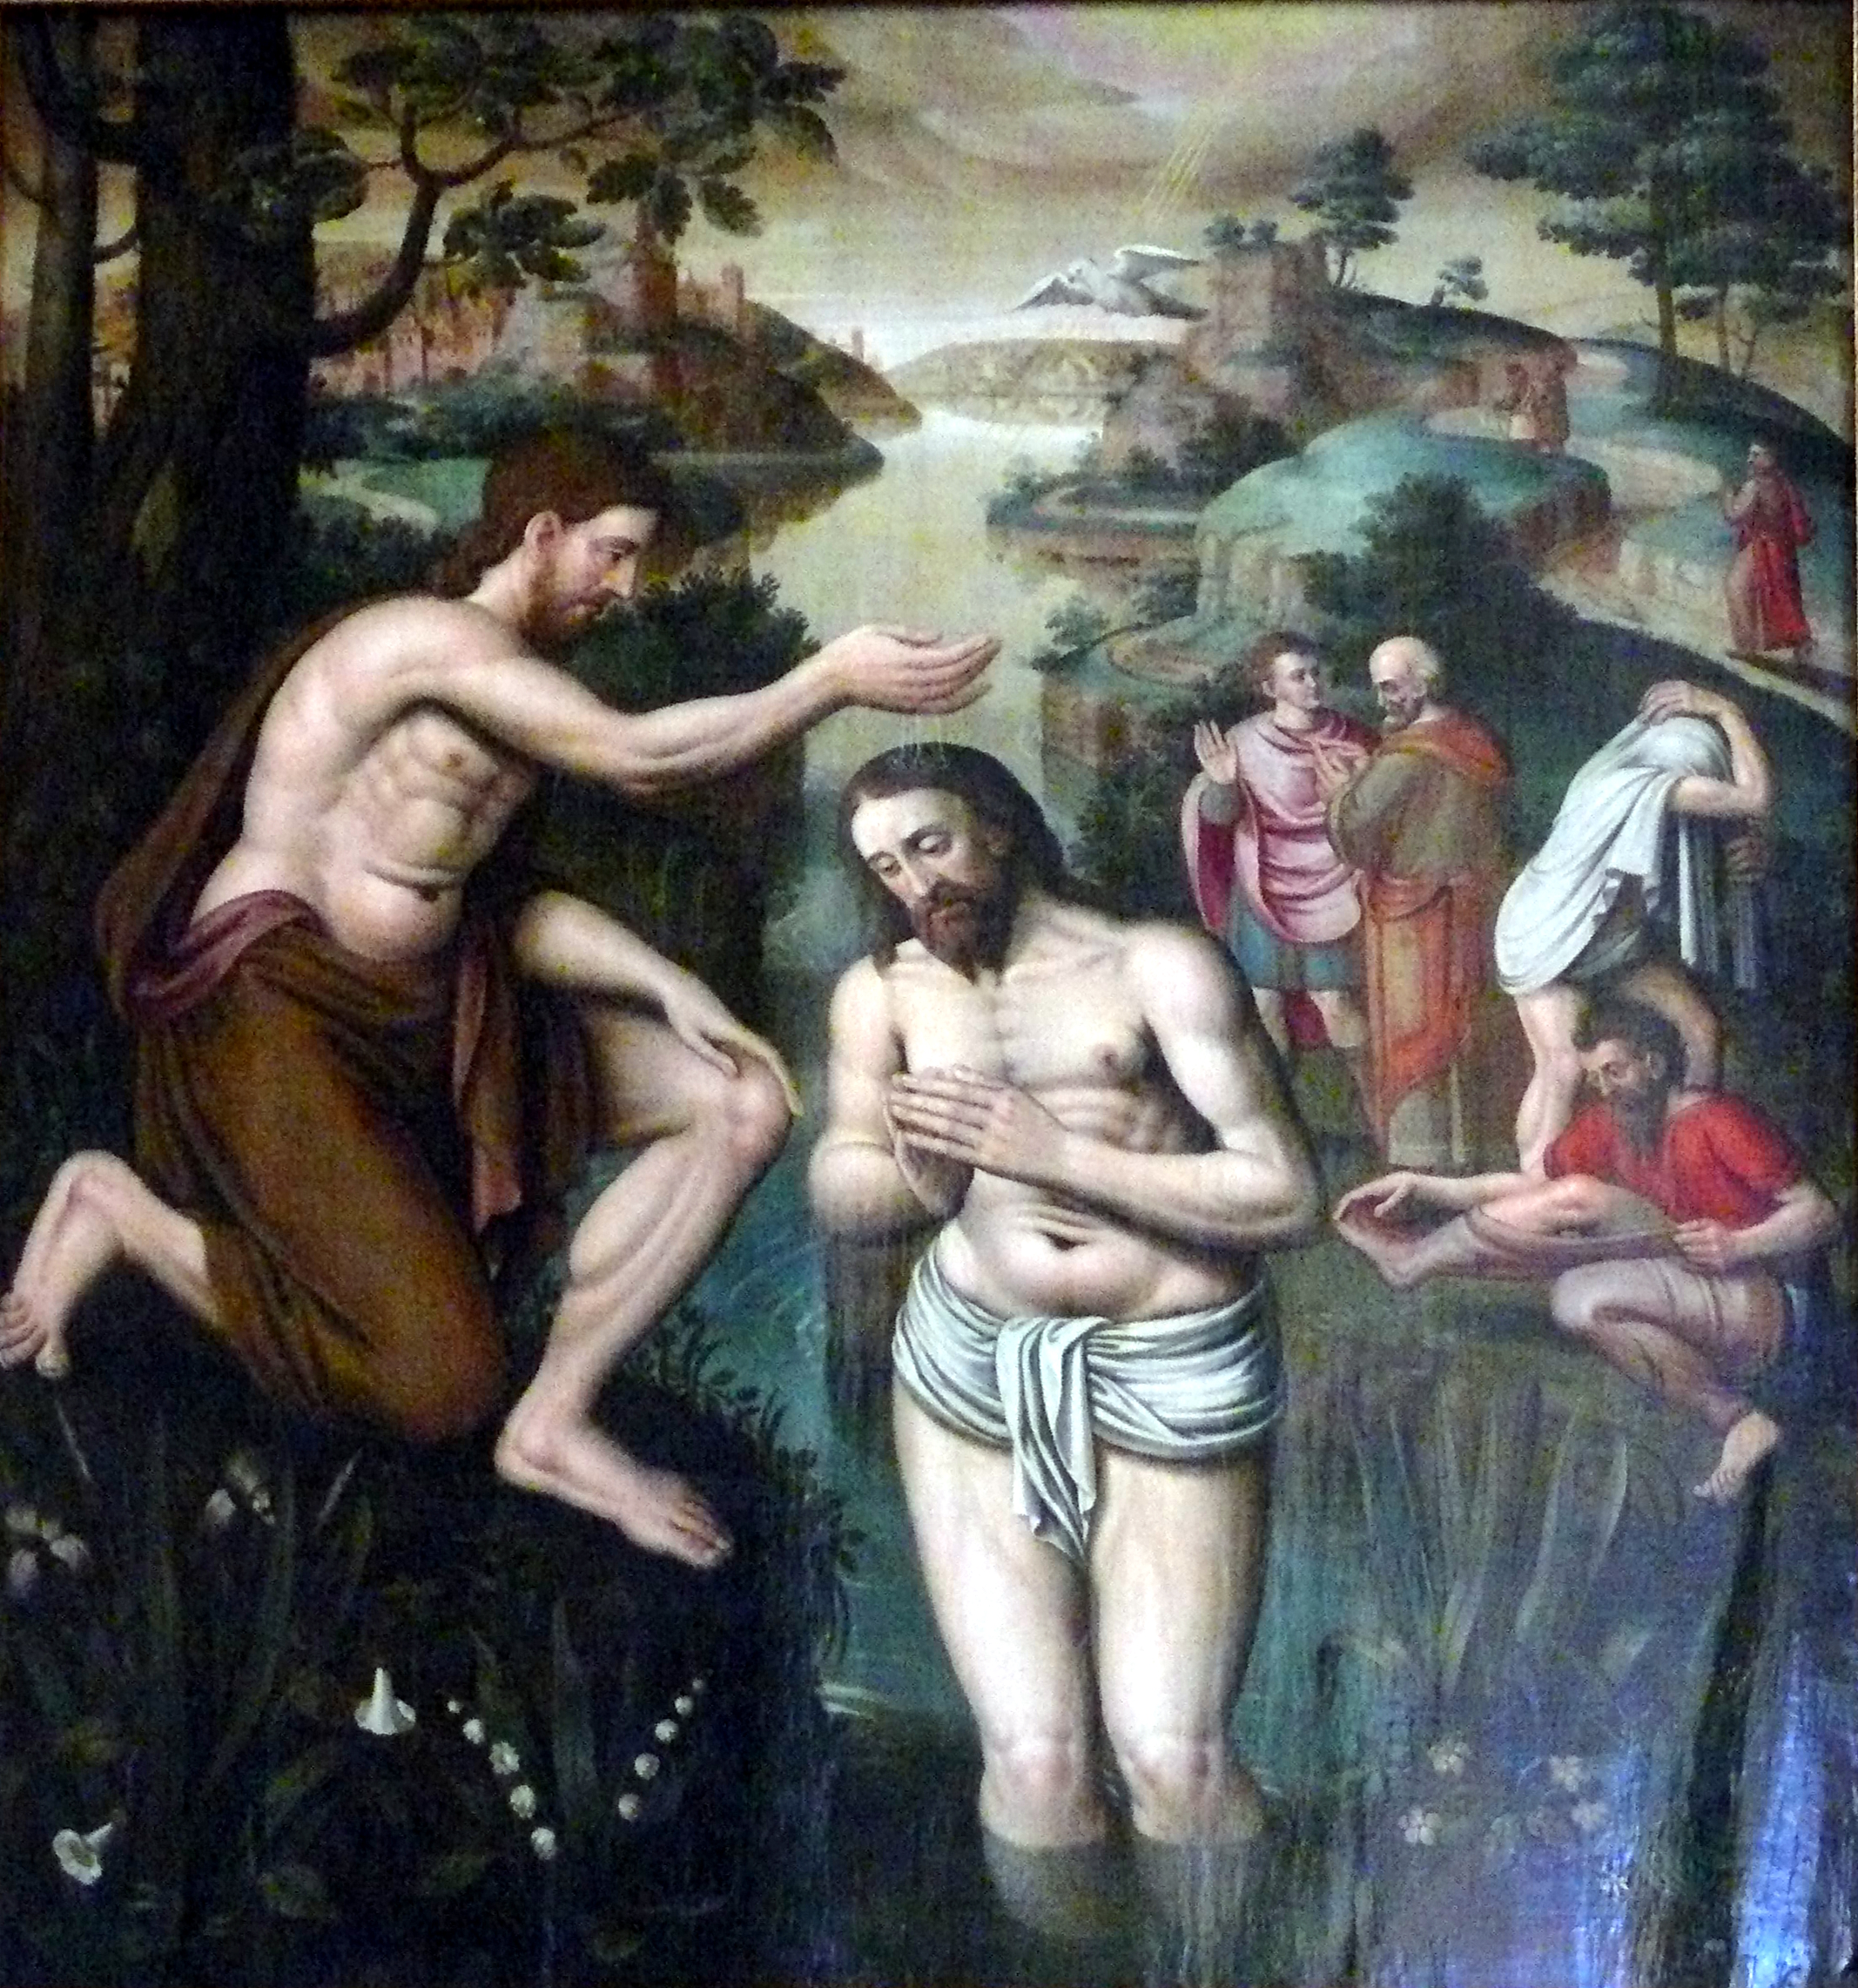 Nicolaus Von Der Perre: "Battesimo di Gesù"